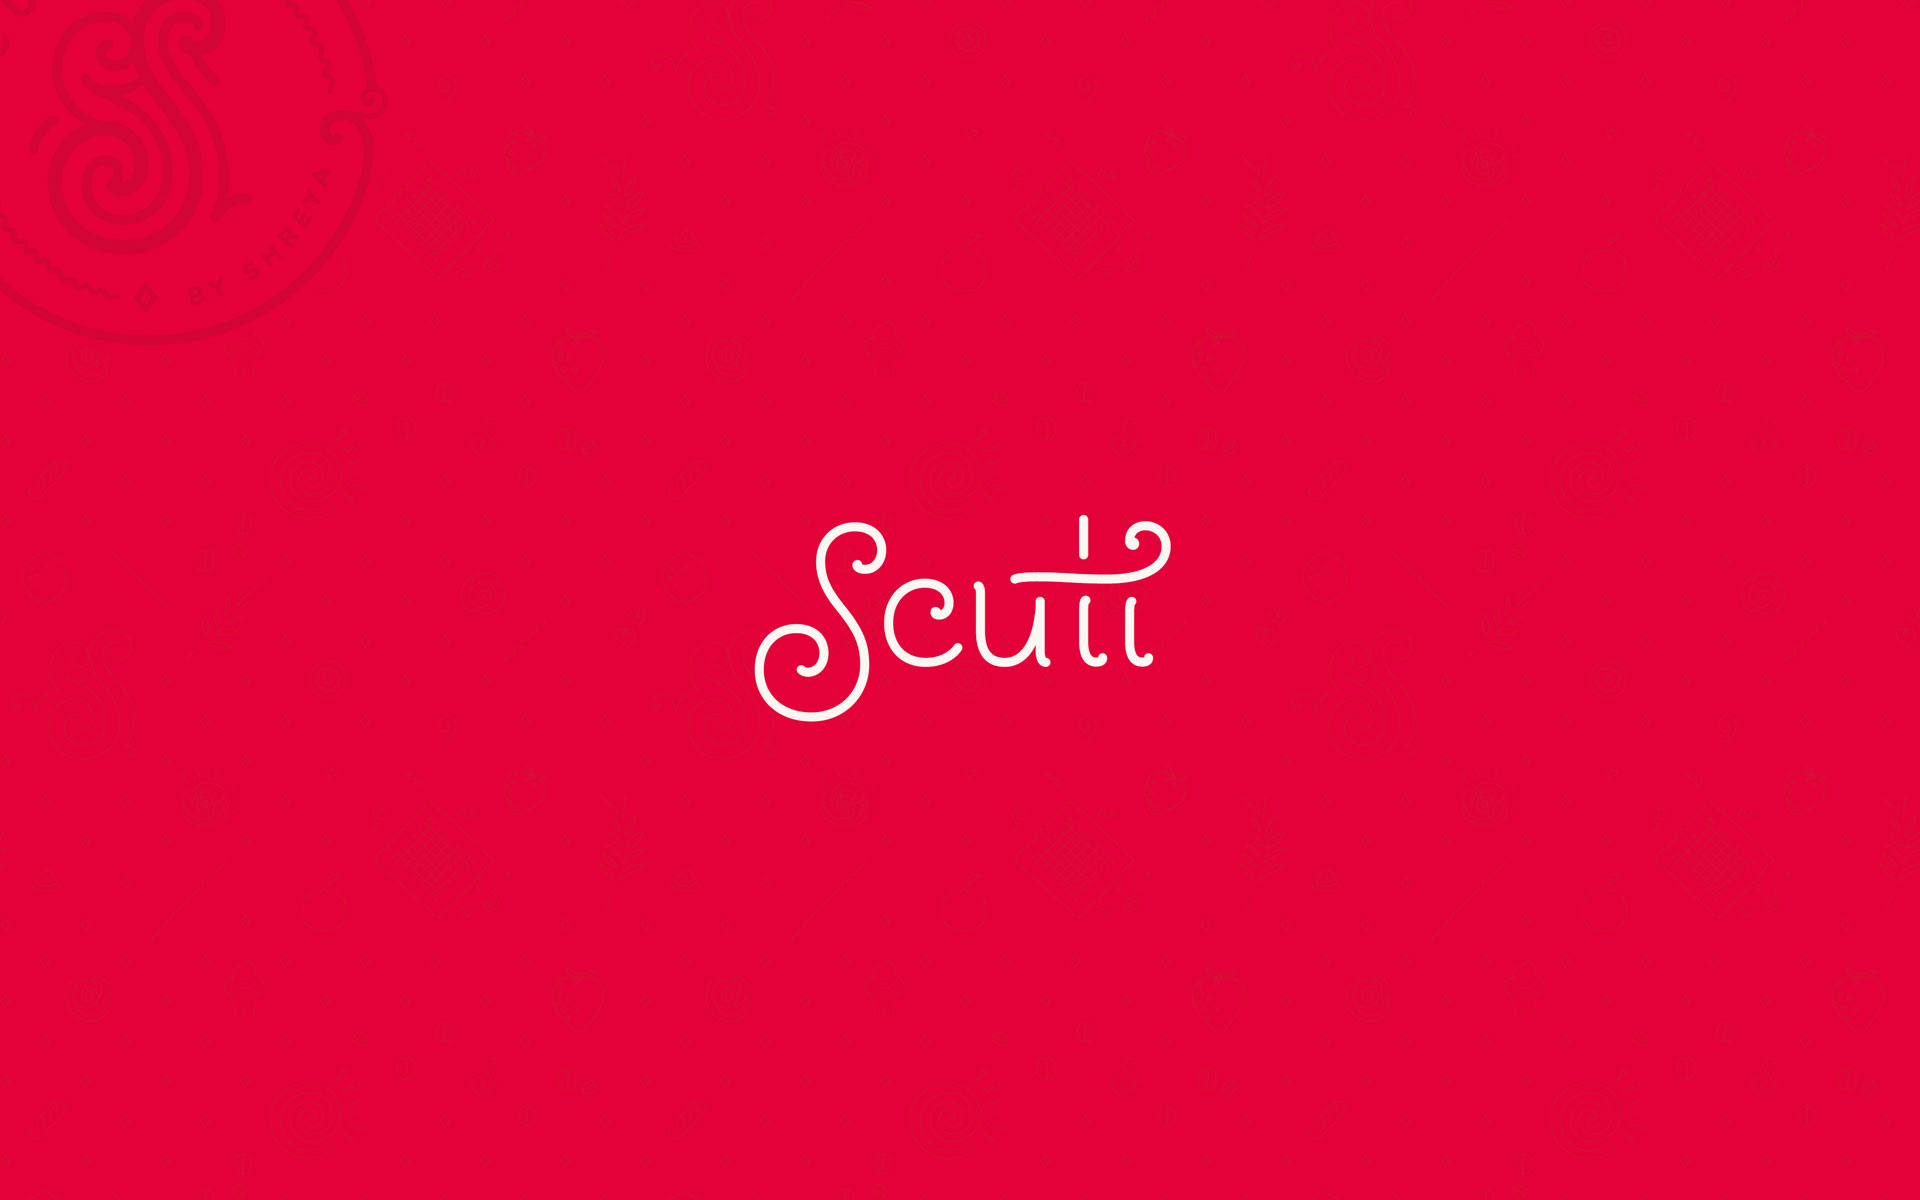 Scuti - Gourmet Desserts & Chocolates - Identity Design - Logotype